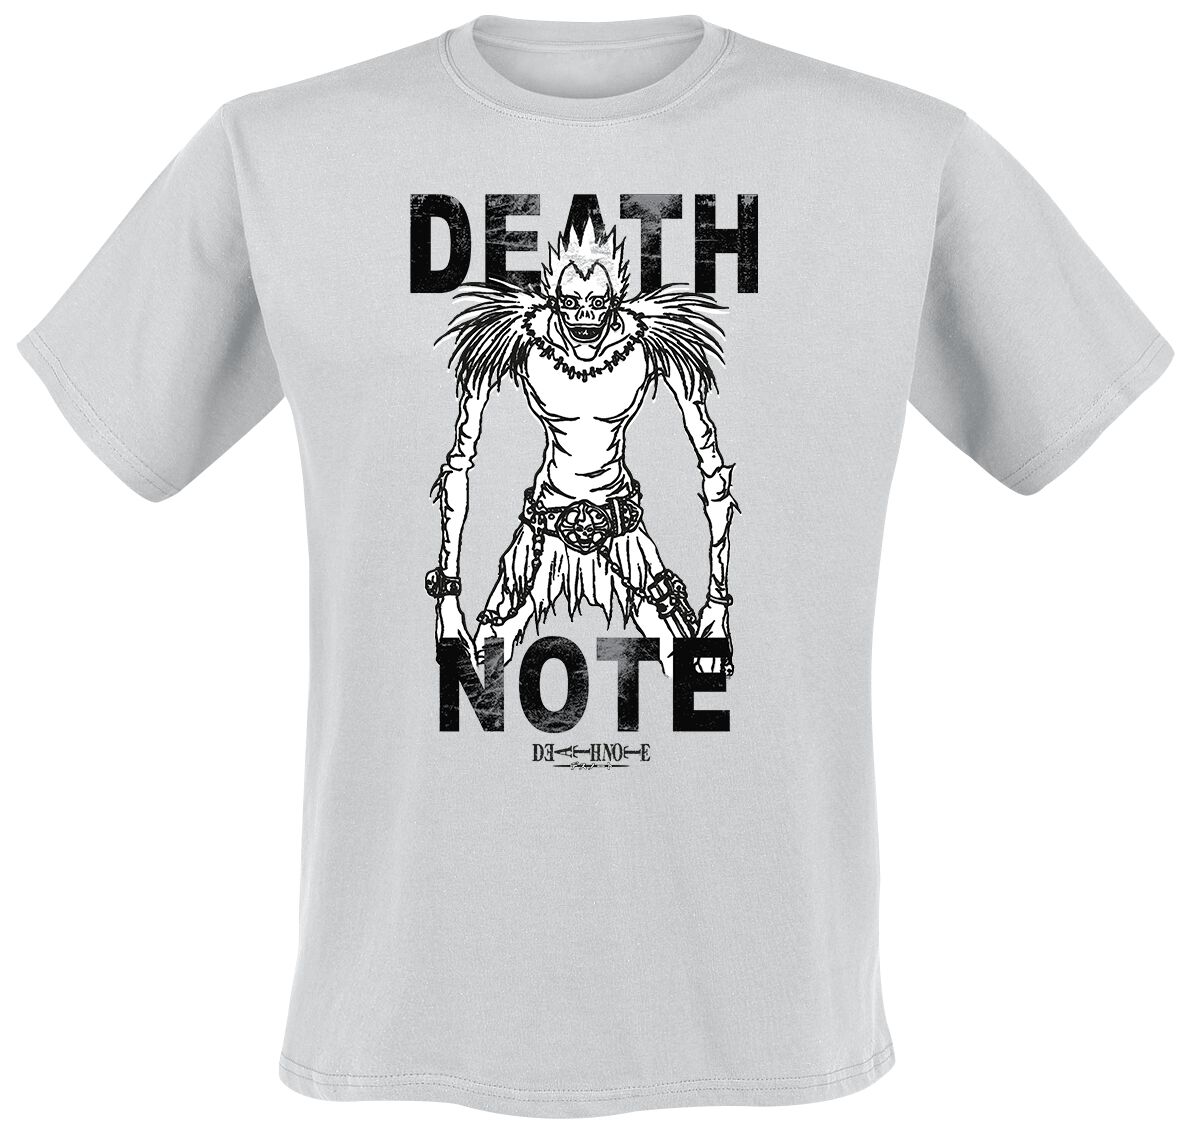 Death Note Ryuk Outlined T-Shirt mottled grey